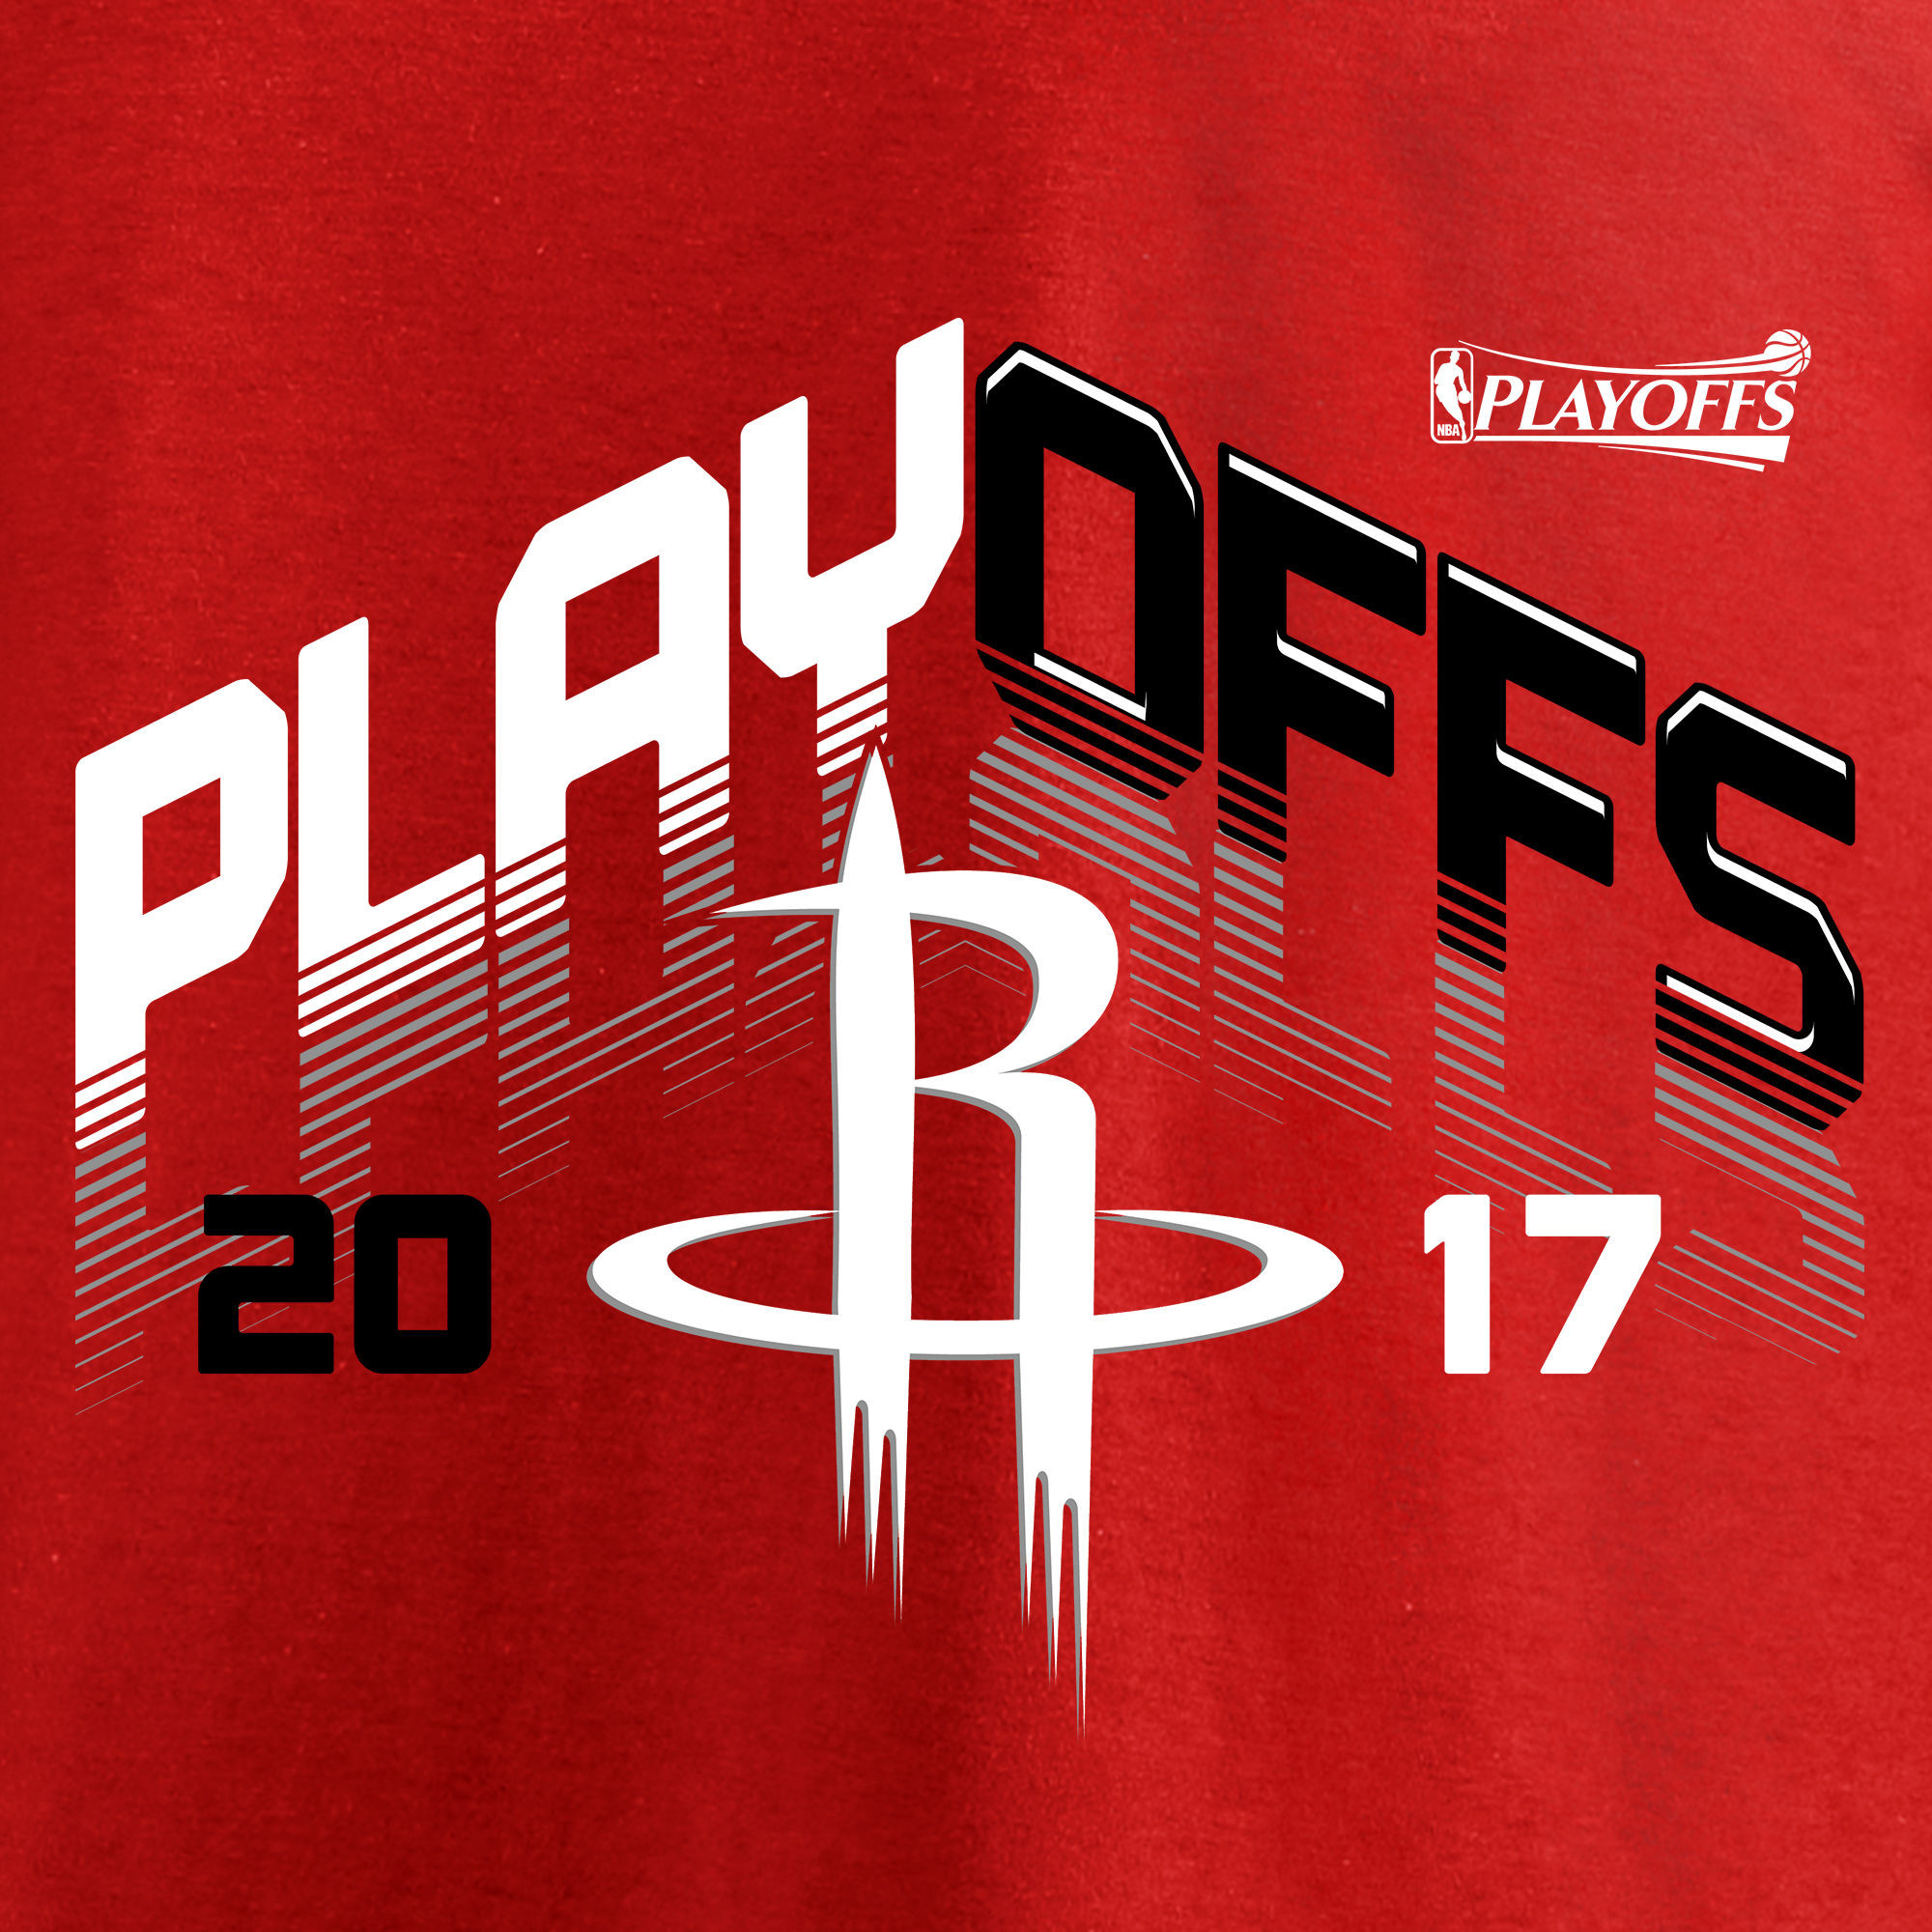 2000x2000 Houston Rockets | 2017 NBA Playoffs